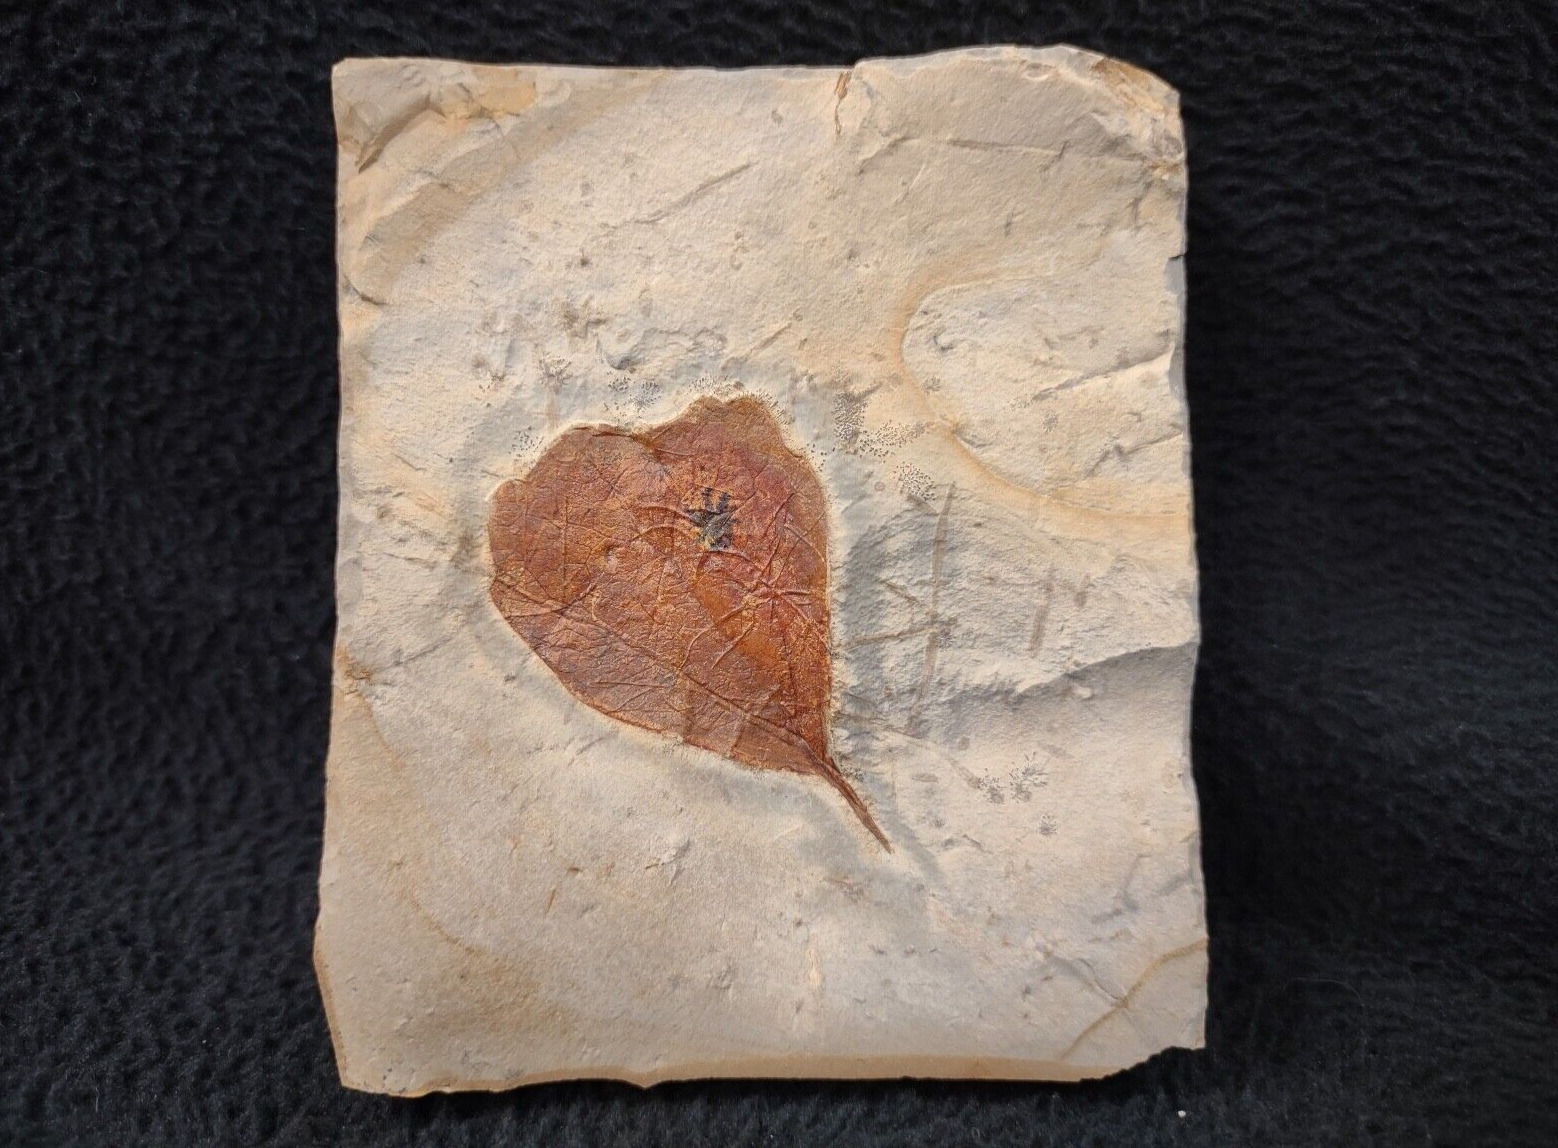 Rarely Seen Leaf Fossil, Fort Union Formation, Glendive, MT